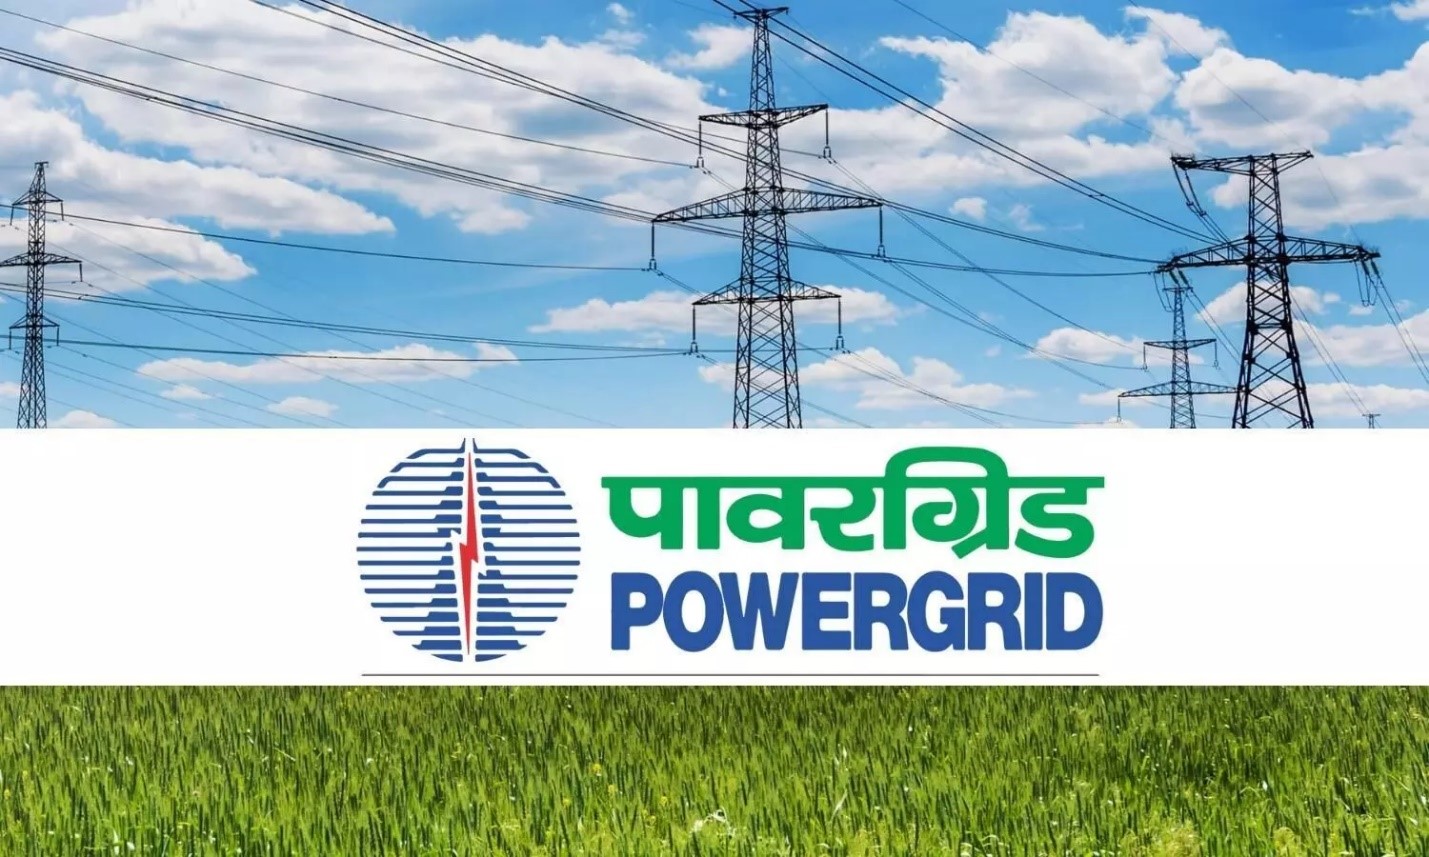 powergrid article